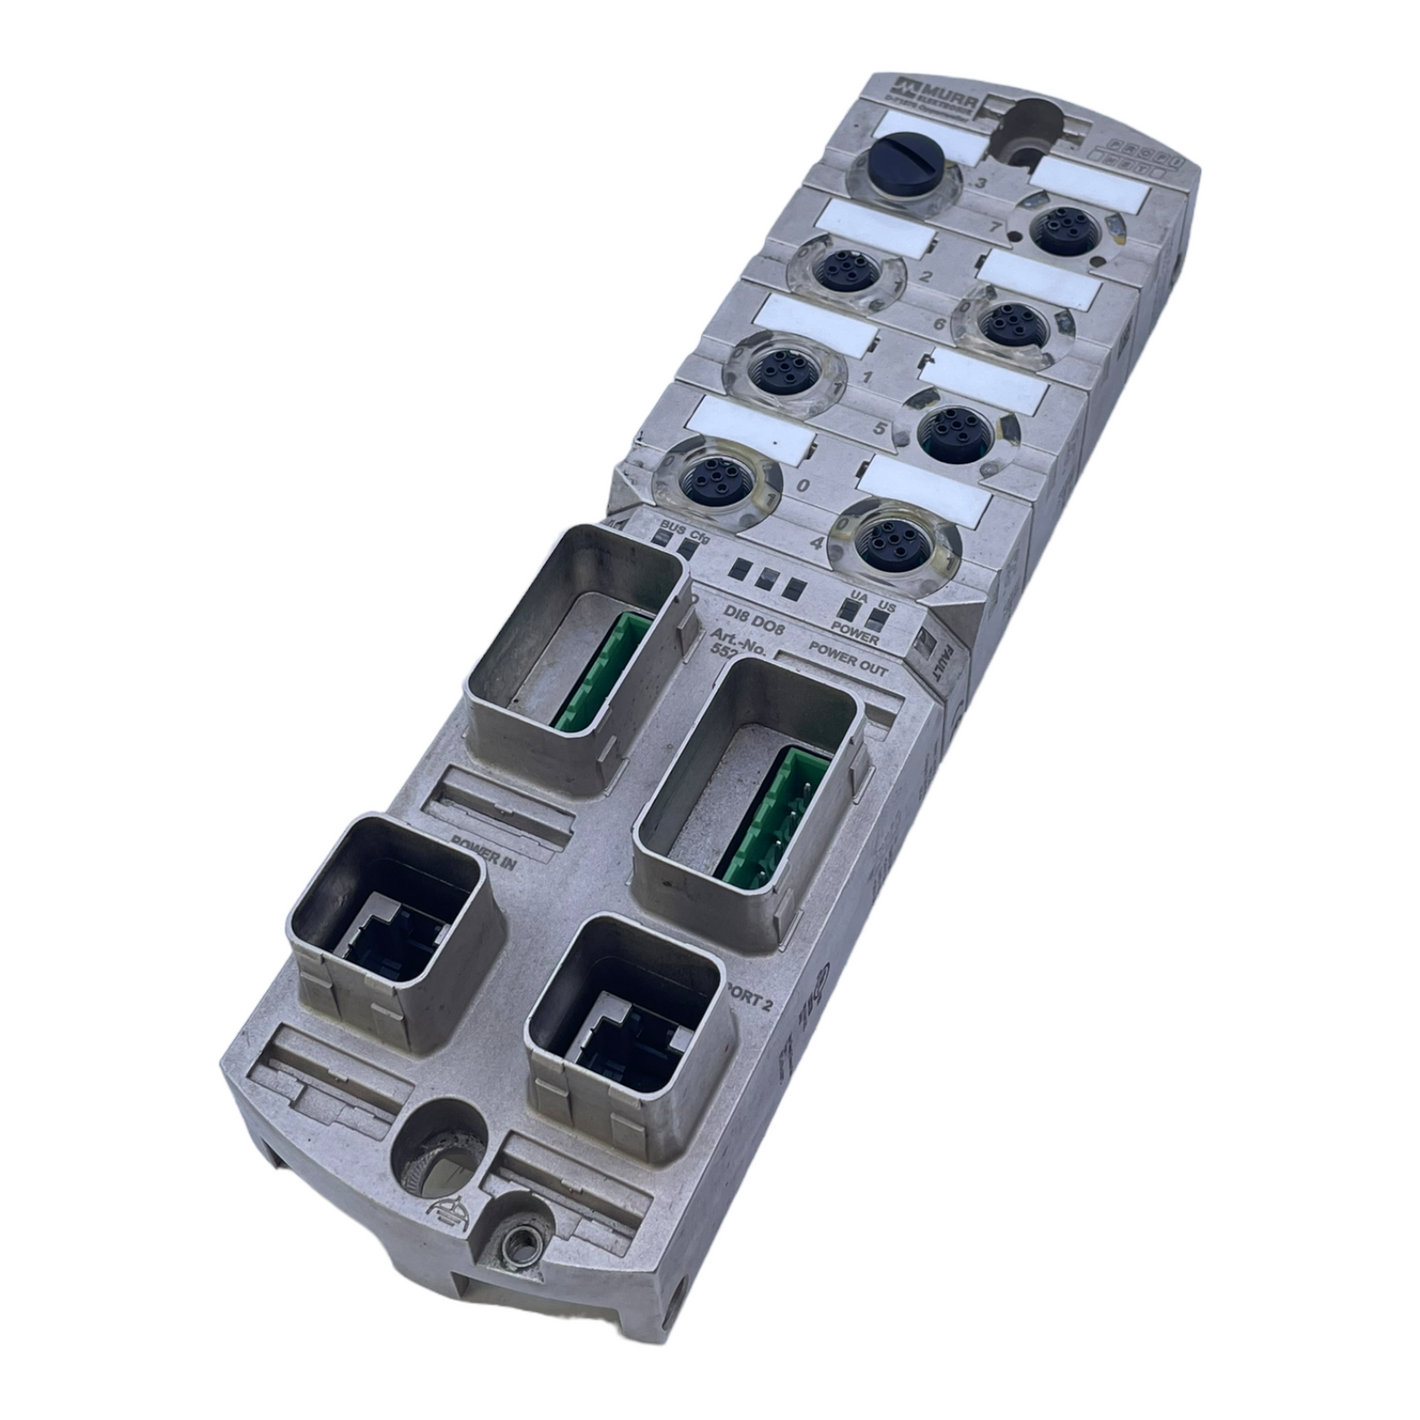 Murr Elektronik MVK+MPNIO DI8 DO8 55269 Kompaktmodul für industriellen Einsatz